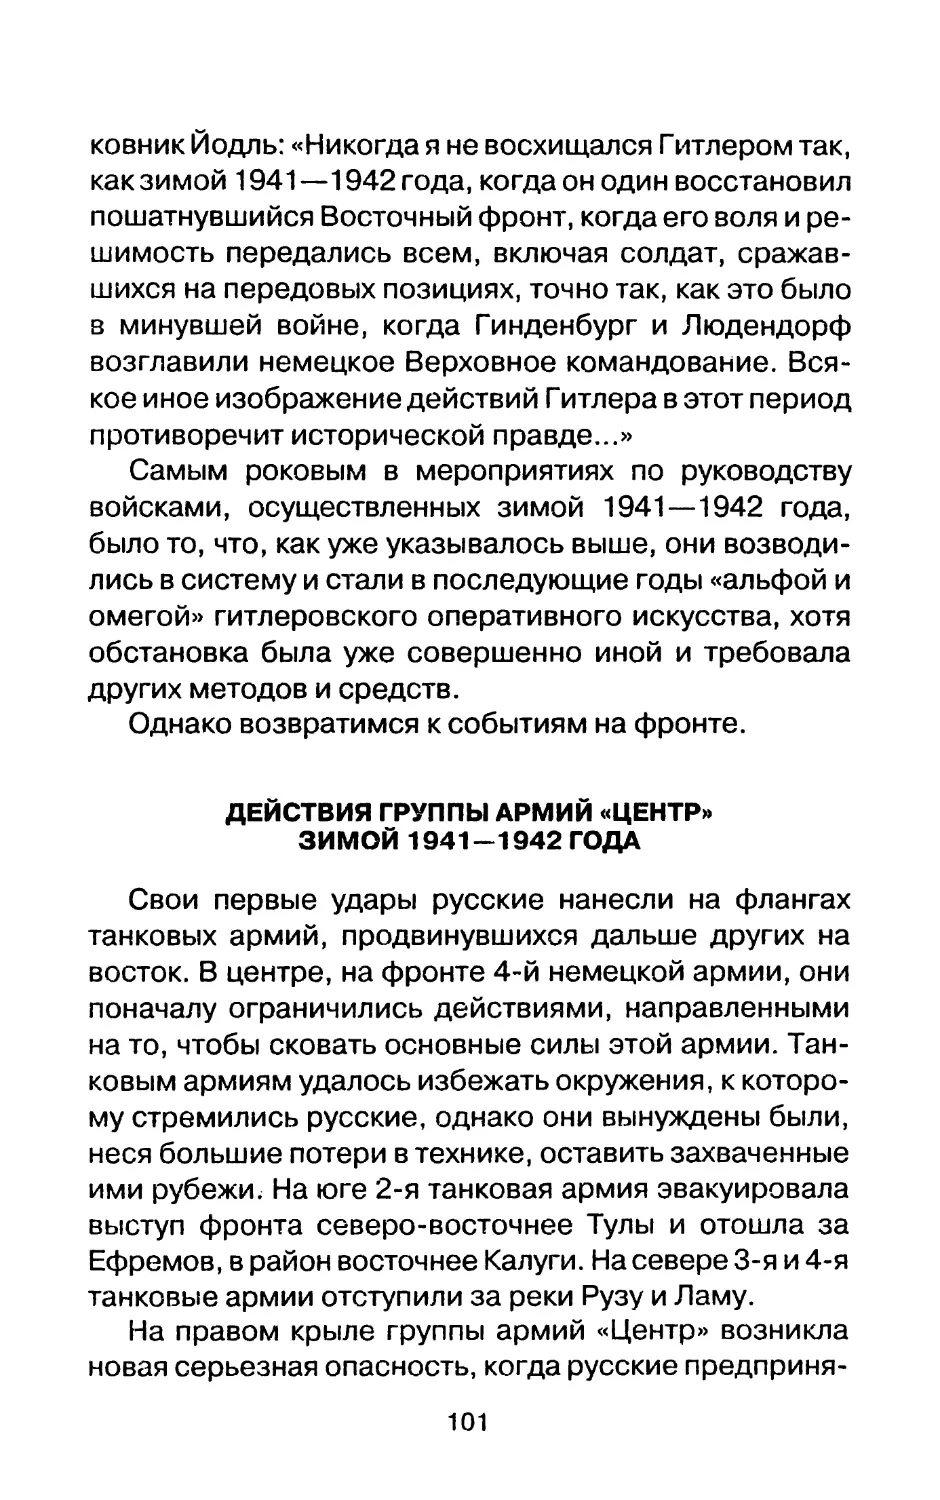 ДЕЙСТВИЯ ГРУППЫ АРМИЙ «ЦЕНТР» ЗИМОЙ 1941-1942 ГОДА